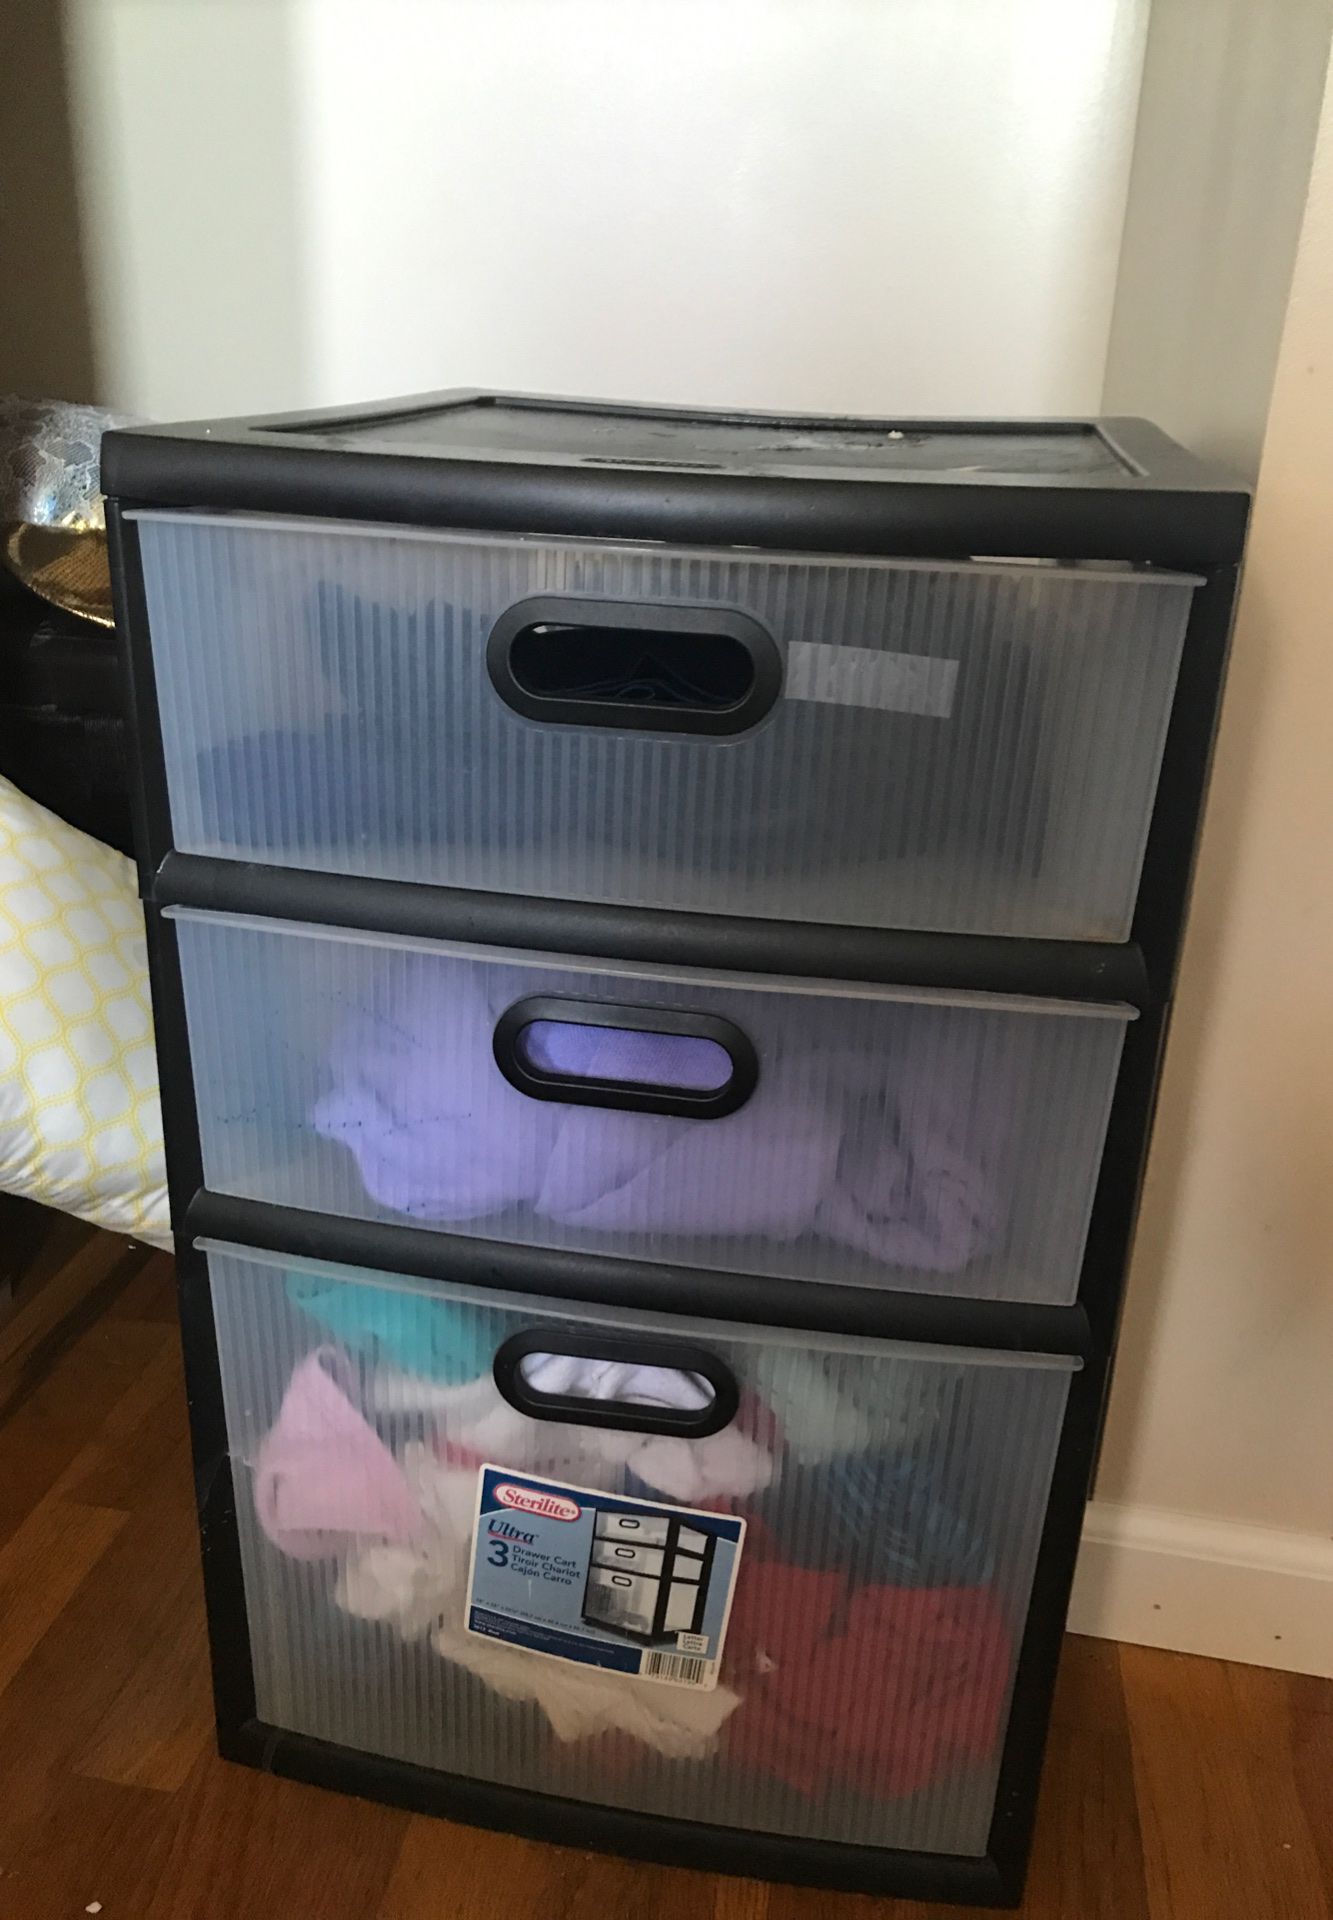 3 drawer plastic storage